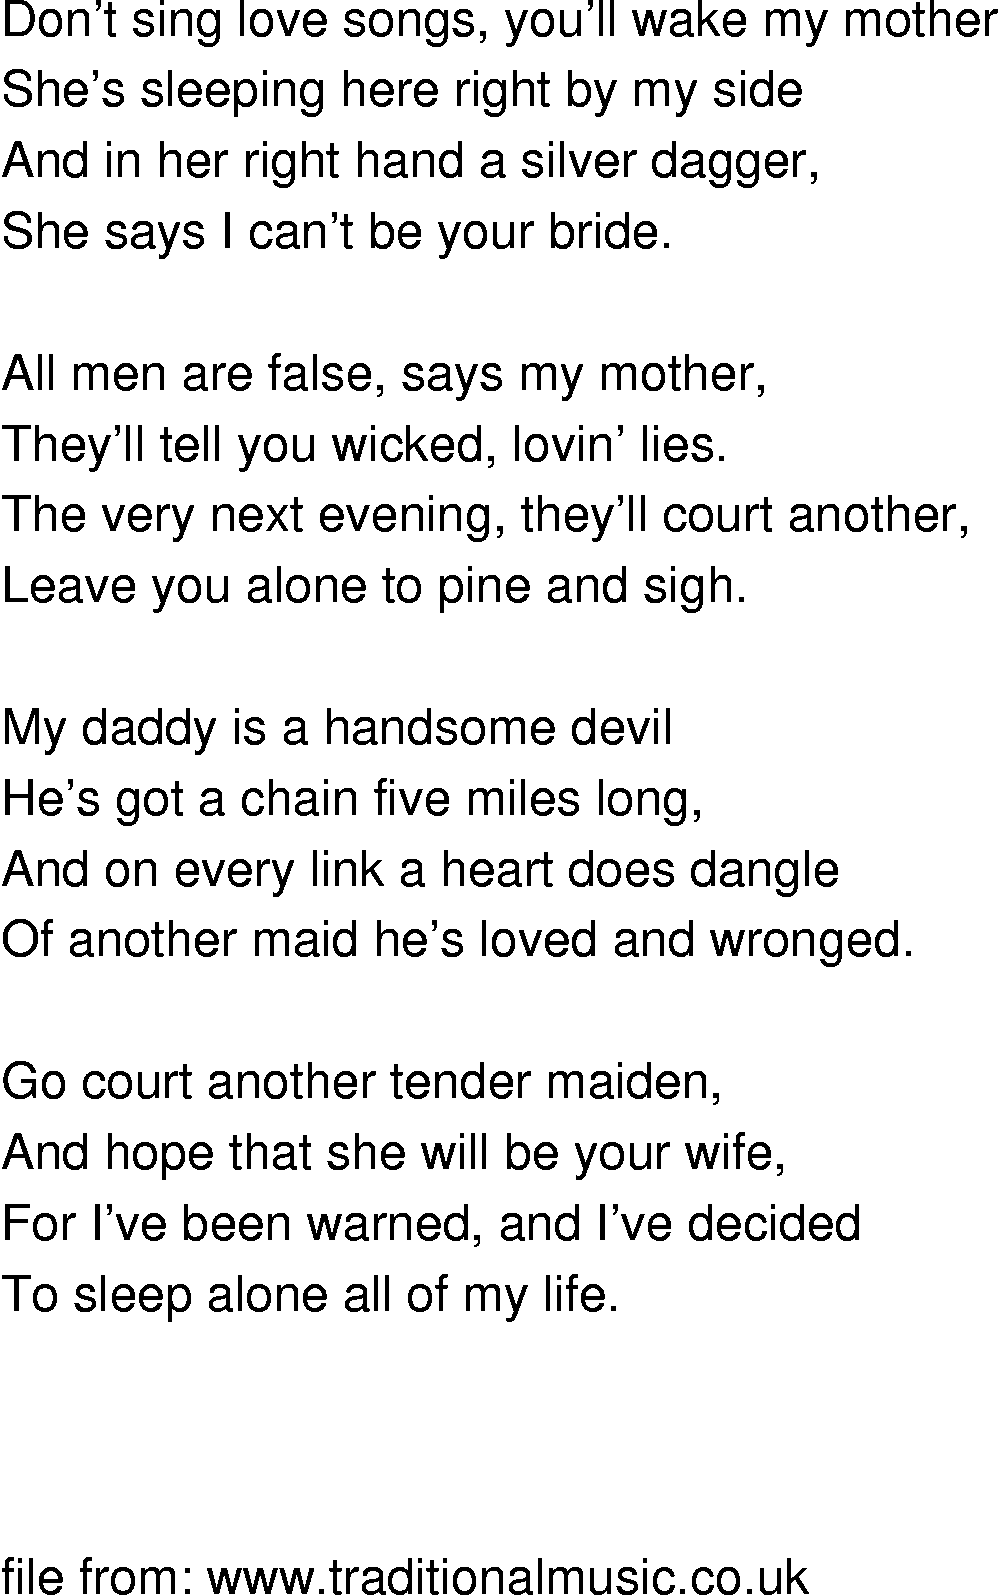 Old-Time (oldtimey) Song Lyrics - silver dagger